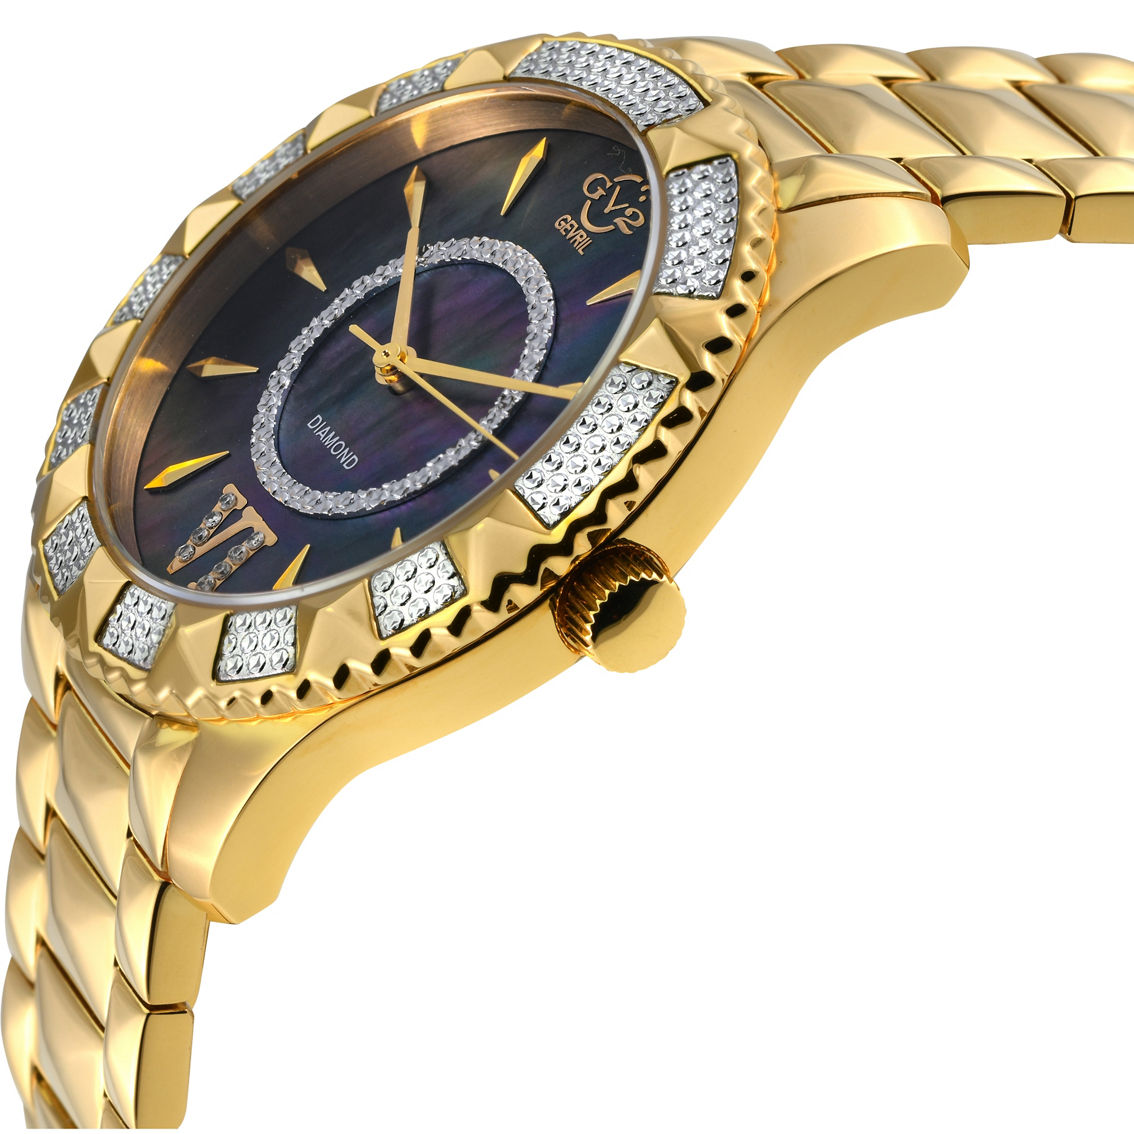 Gevril Women's GV2 Venice Diamond Quartz Watch 11715-424 - Image 2 of 2